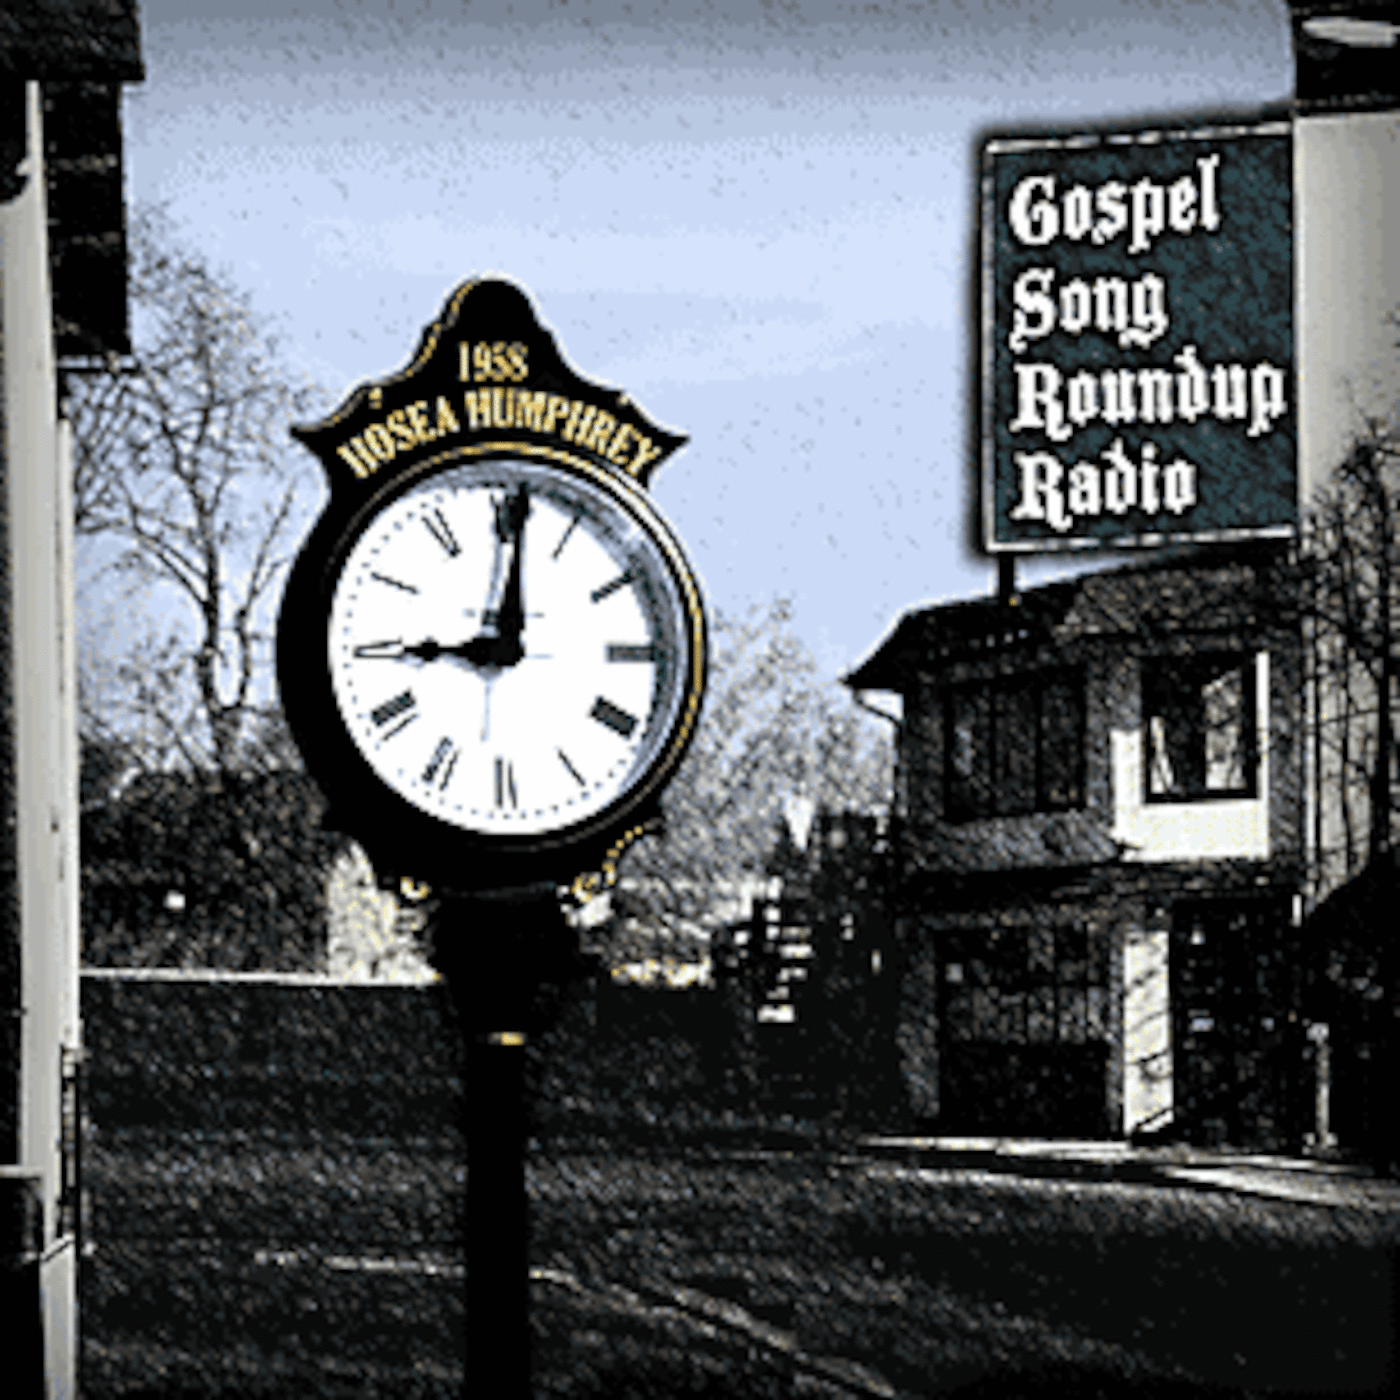 Gospel Song Roundup Radio - No. 17